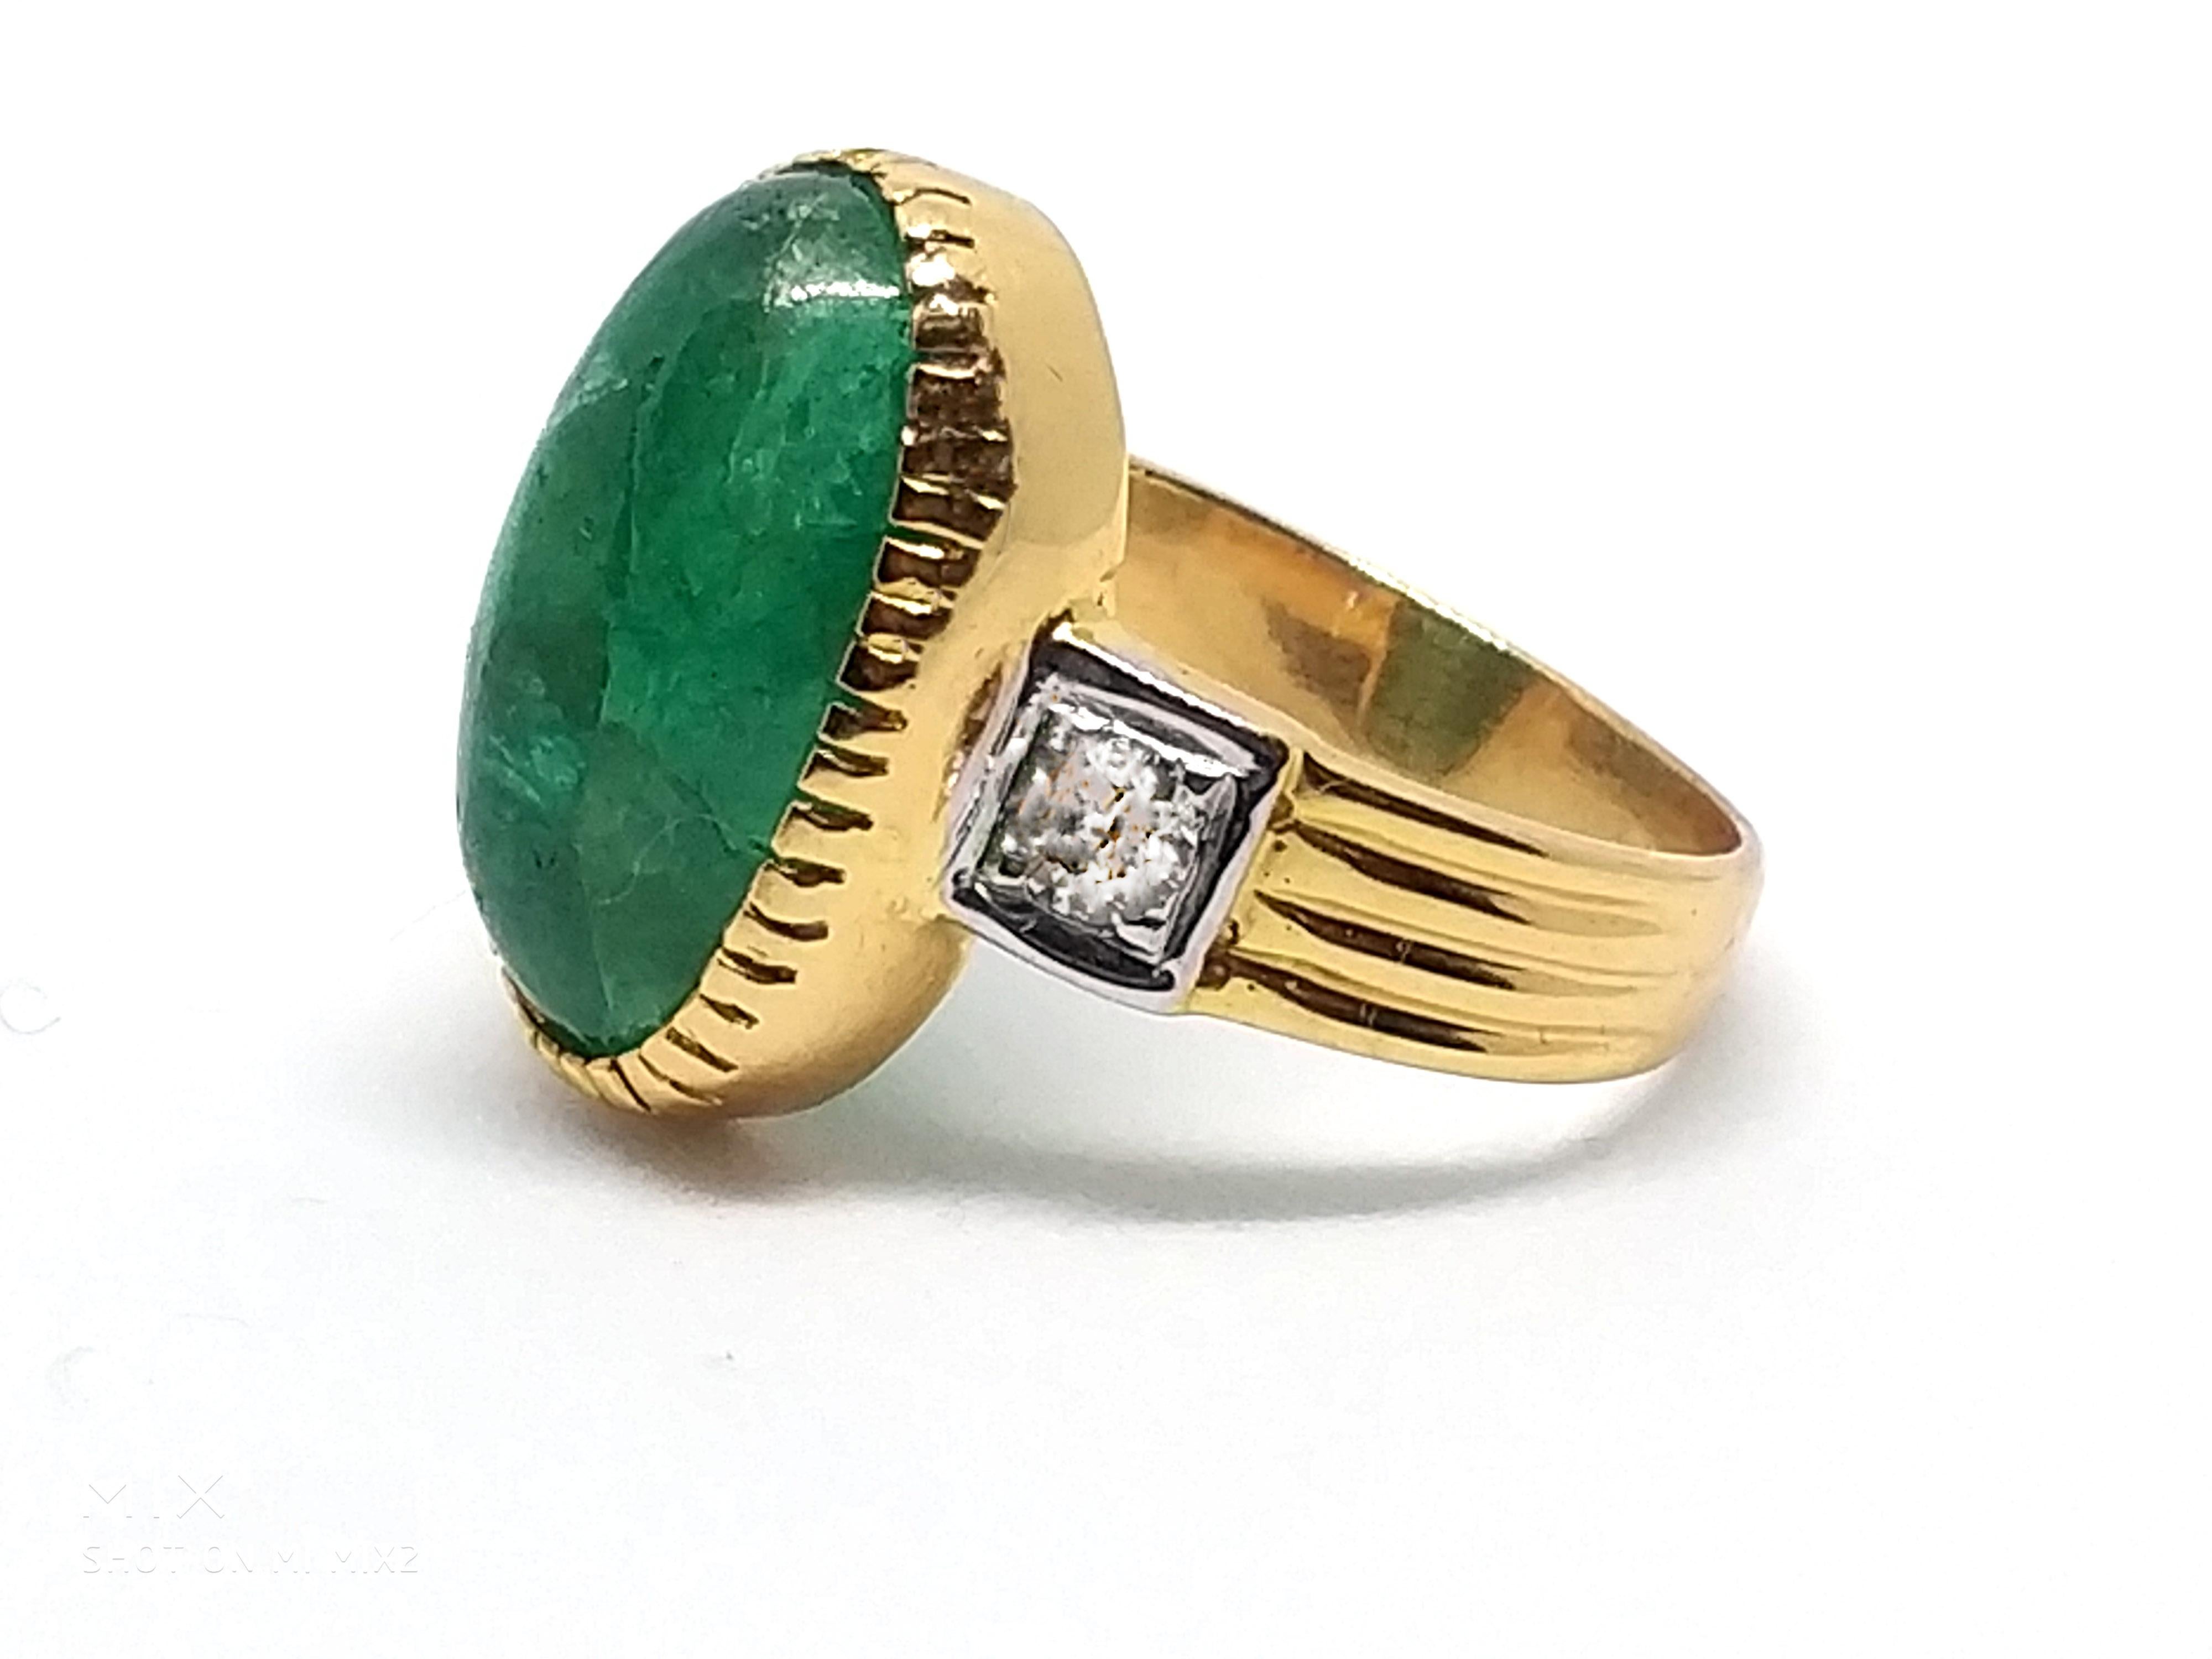 12 Carat Intense Green Emerald and Diamond Ring, circa 1940 For Sale 2